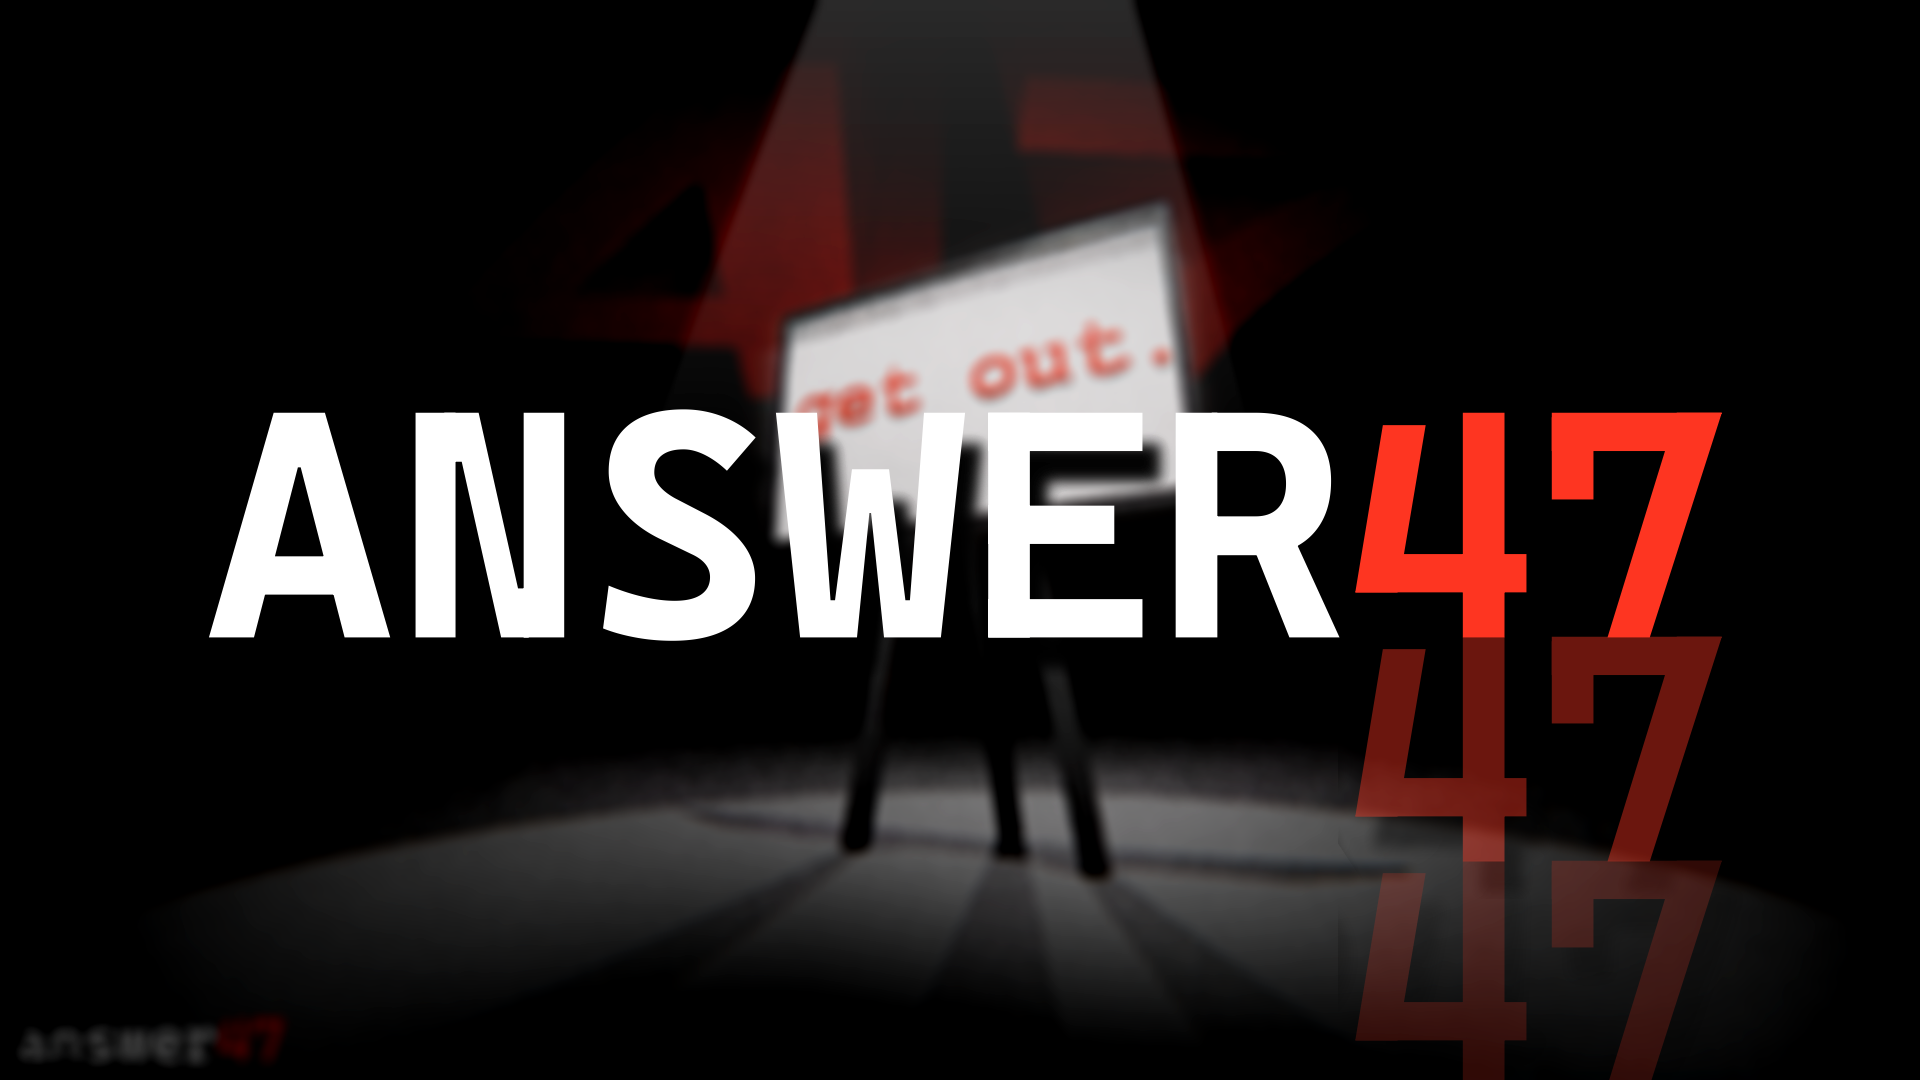 ANSWER 47